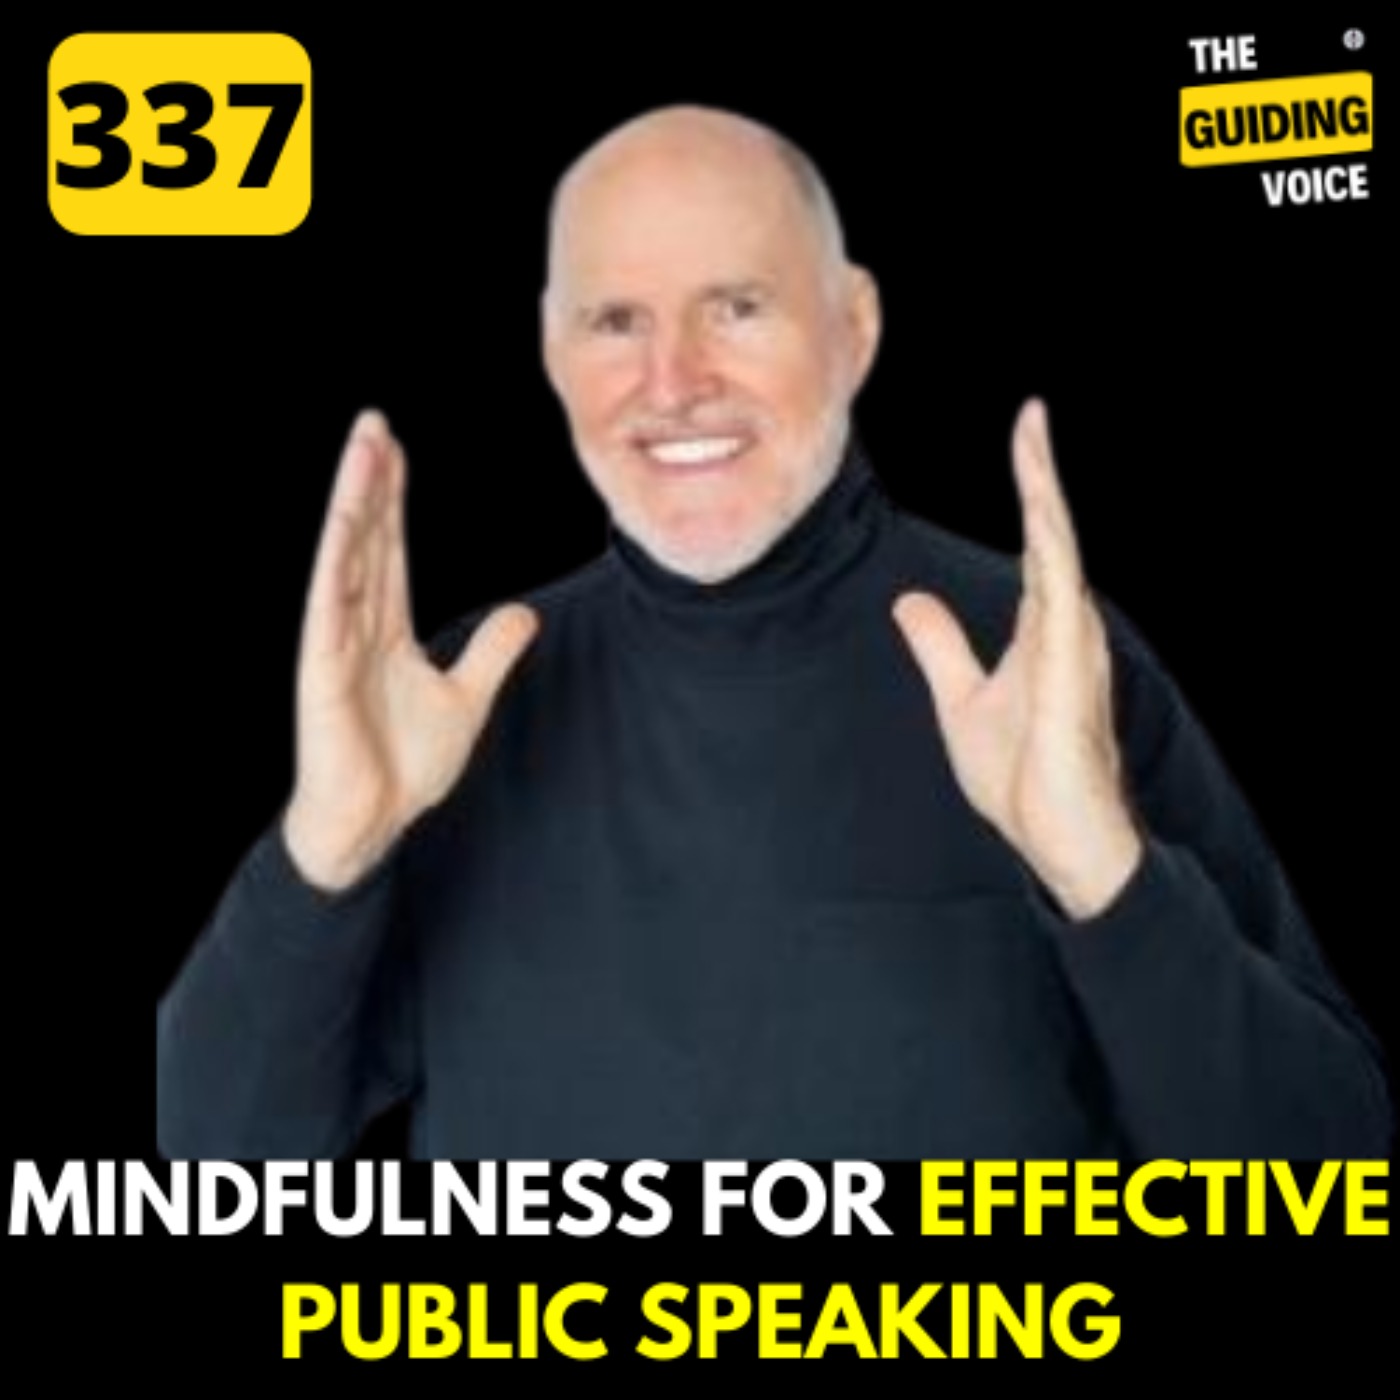 Mindfulness for effective public speaking | ALAN CARROLL | #TGV337